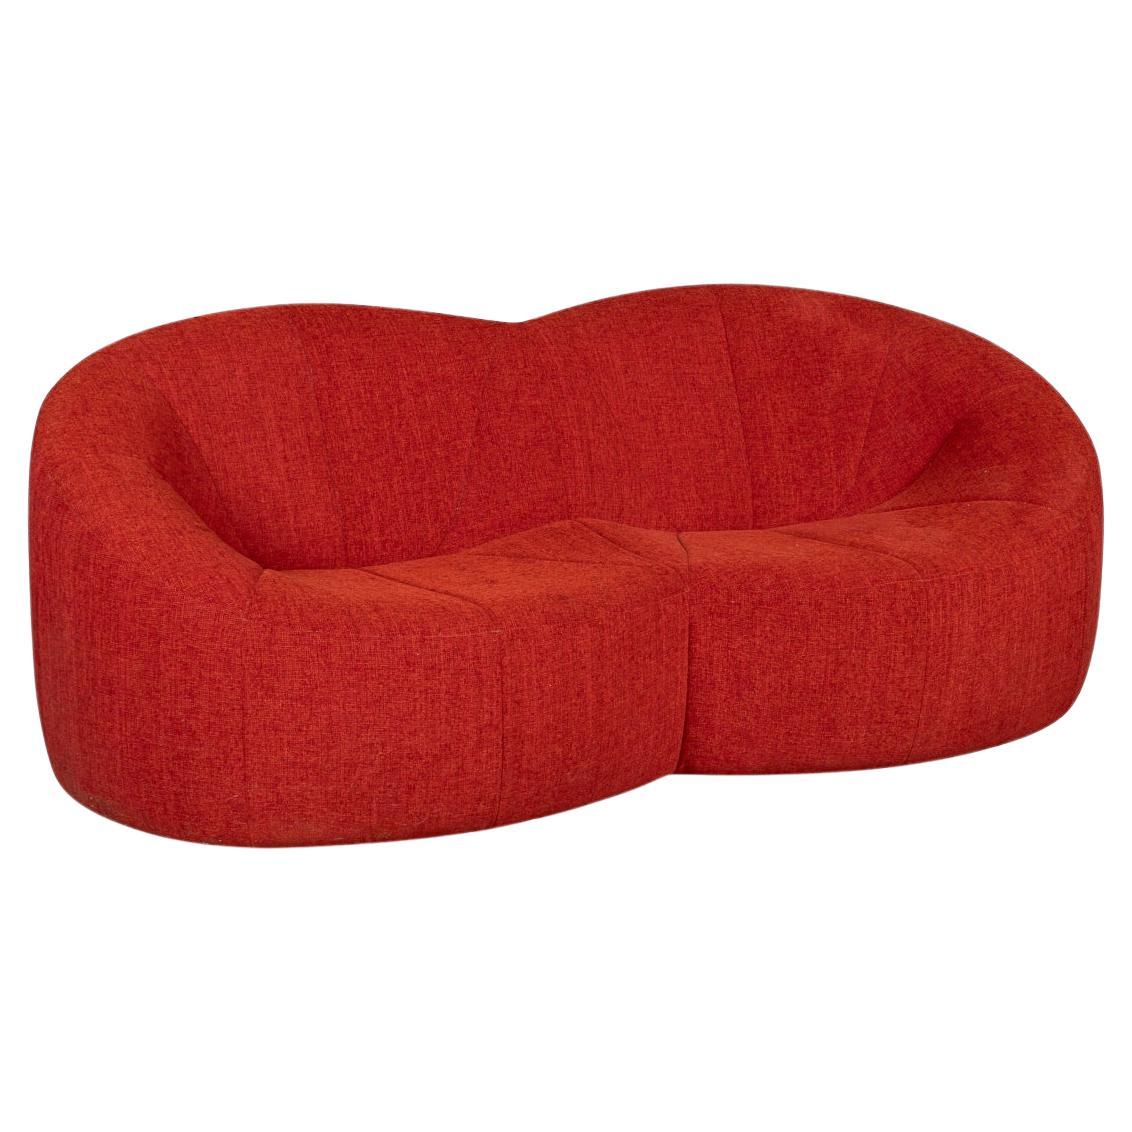 A 21st Century Red "Pumpkin Sofa" By Ligne Roset, France c.2010